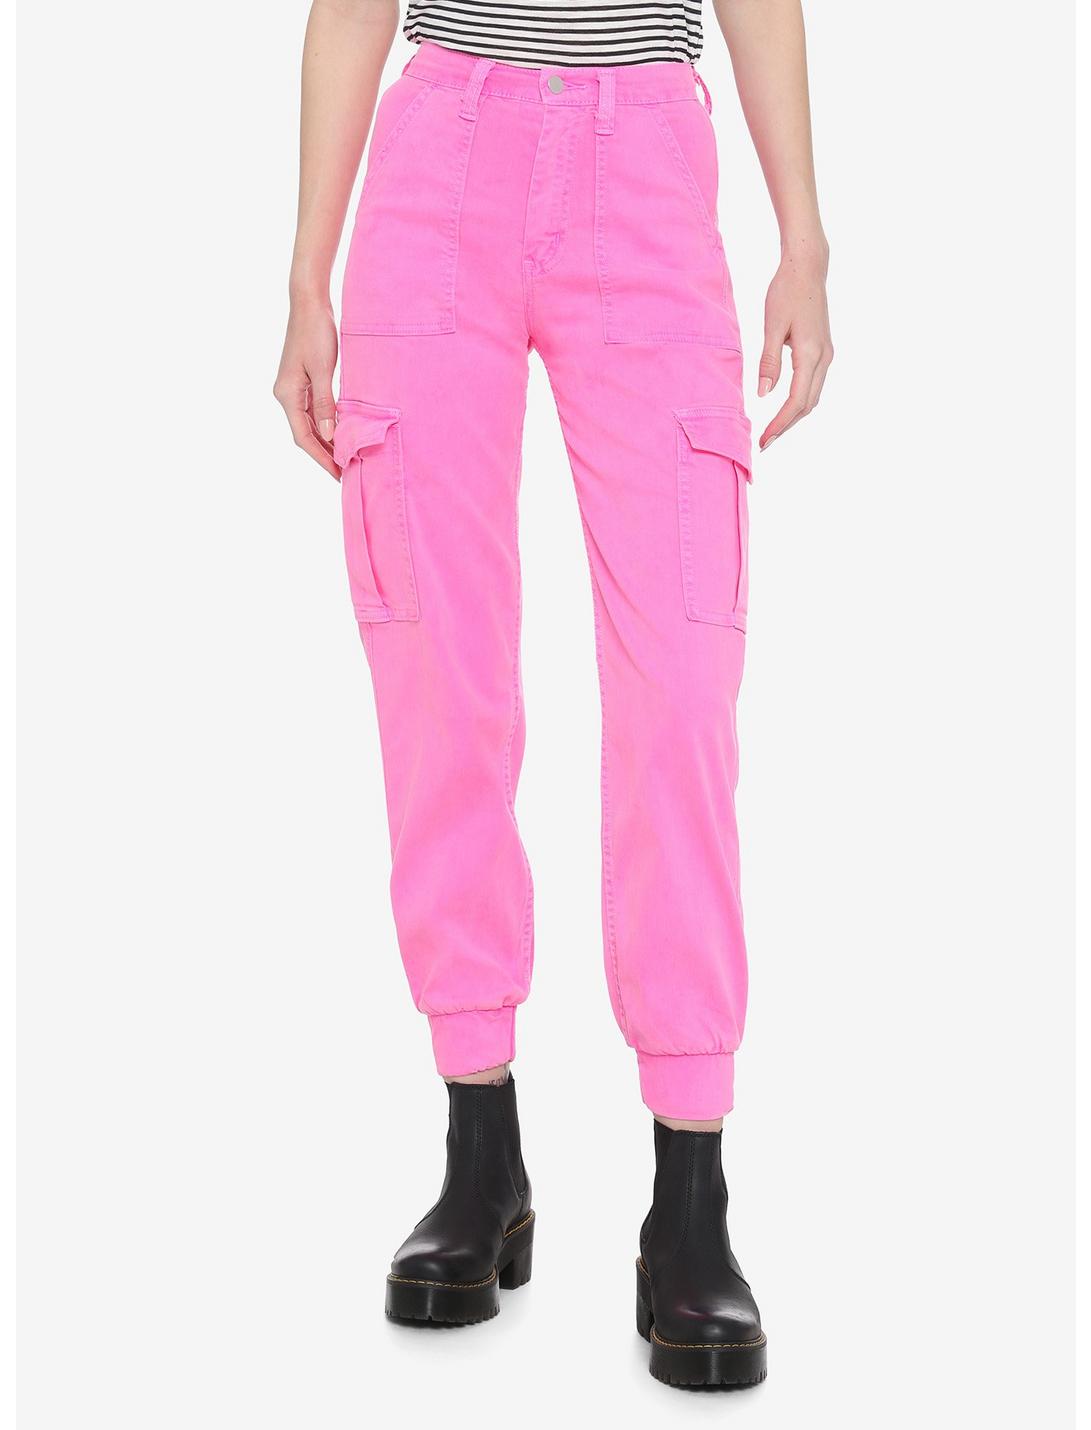 Pink Cargo Jogger Pants, PINK, hi-res